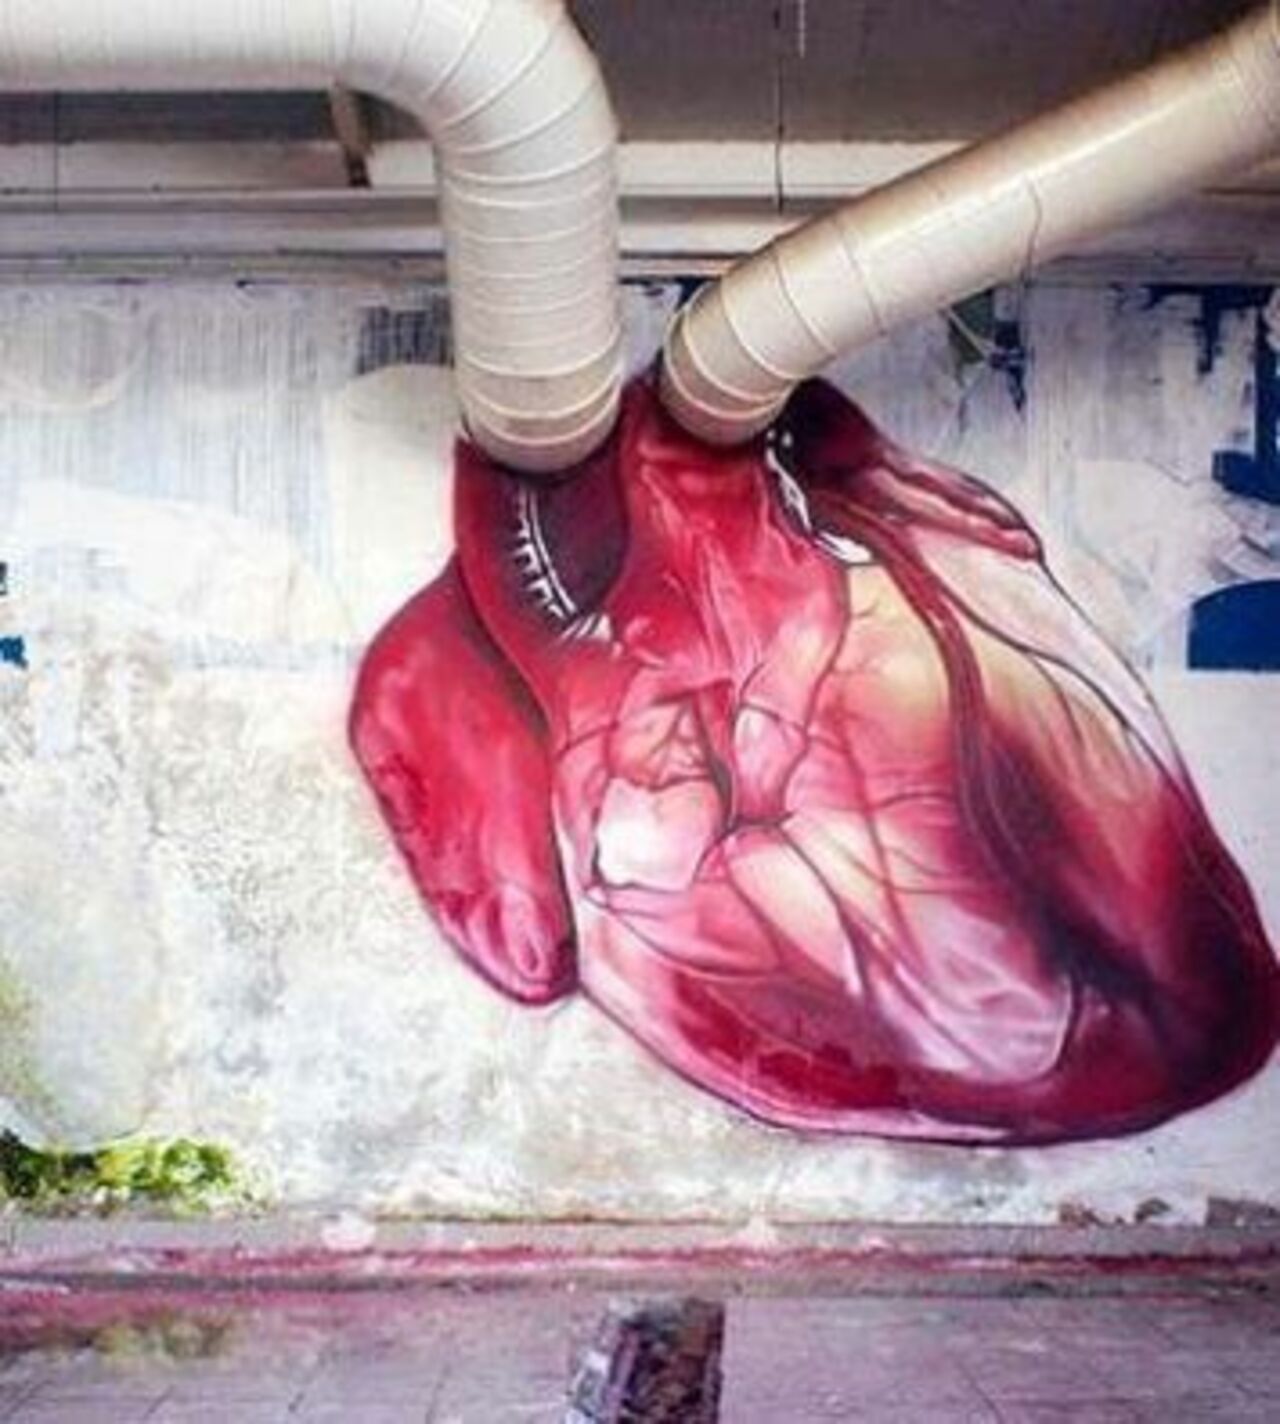 #Heart – Creative #Streetart | Be ▲rtist - Be ▲rt https://beartistbeart.com/2016/08/22/heart-creative-streetart/?utm_campaign=crowdfire&utm_content=crowdfire&utm_medium=social&utm_source=twitter https://t.co/09vCn05wJx